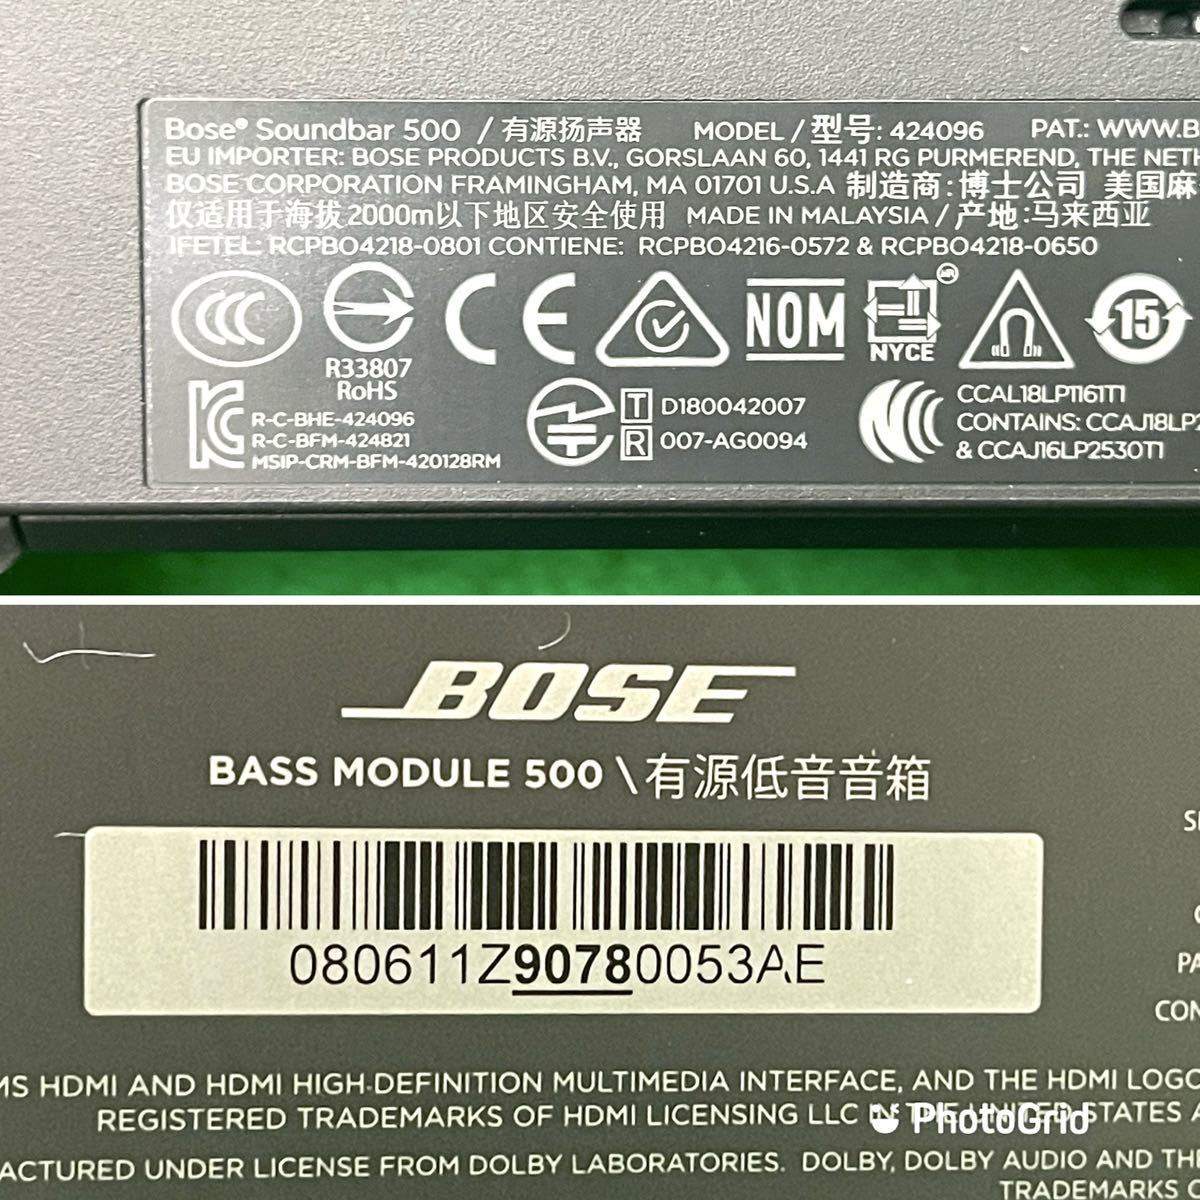 BOSE/ボーズ SOUNDBAR SYSTEM BUNDLE/ BOSE SOUNDBAR 500 ワイヤレスサウンドバー/BASS MODULE  500 ベースモジュール